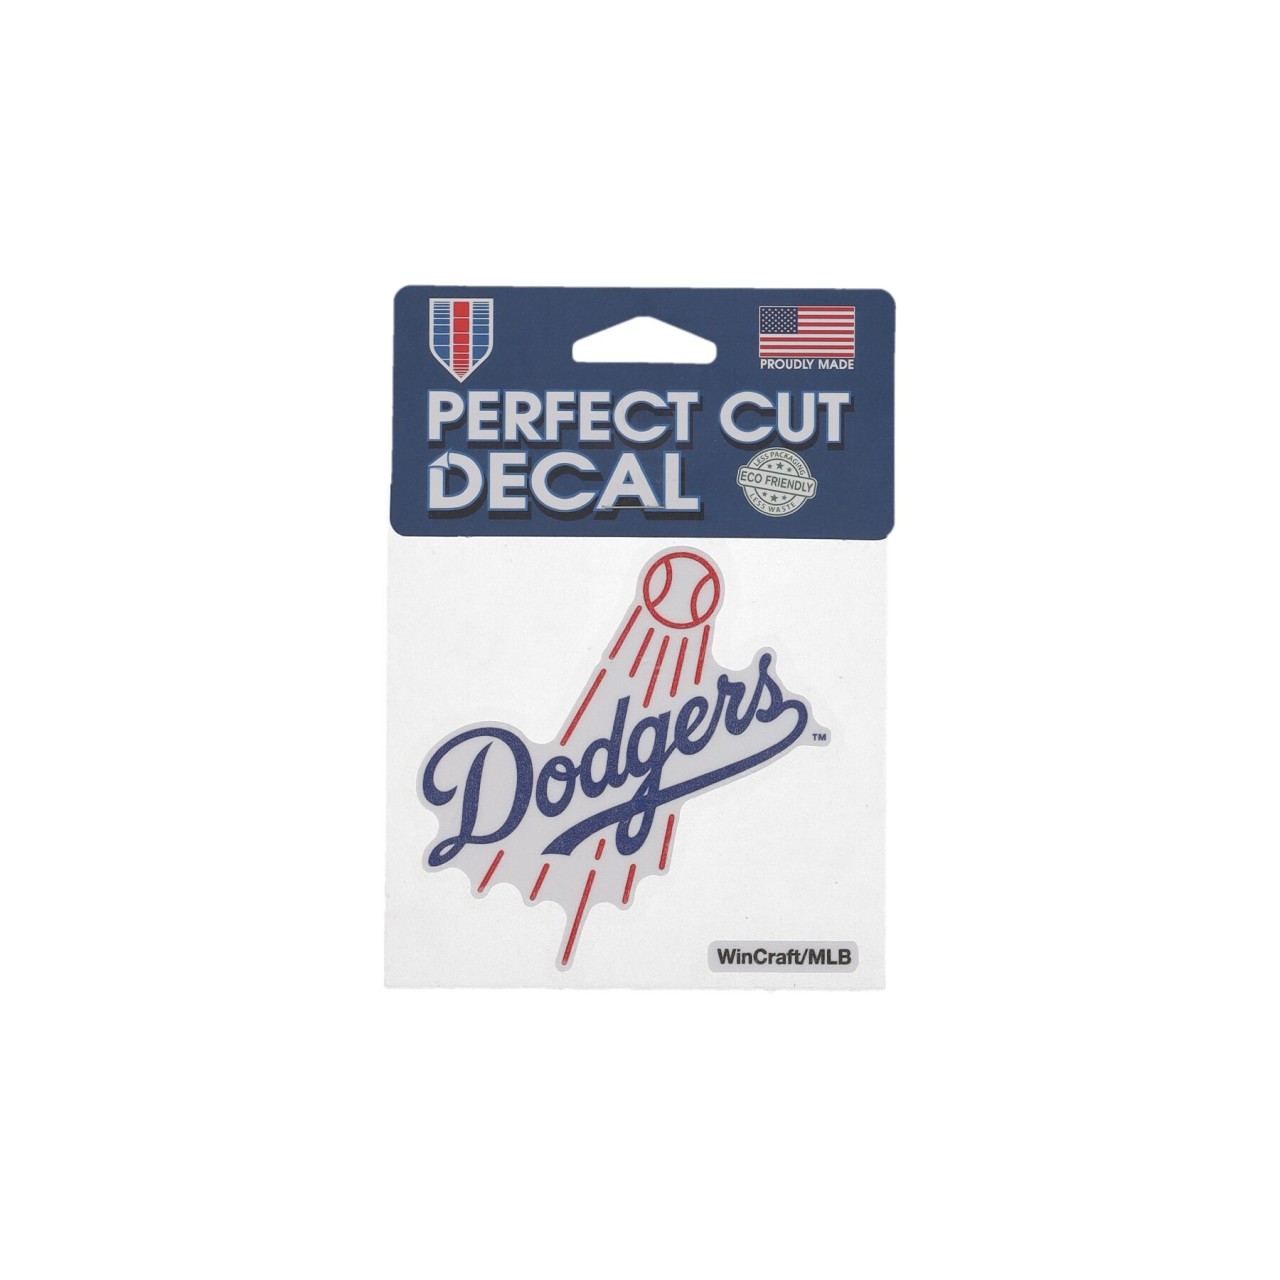 WINCRAFT MLB 4 x 4” PERFECT CUT DECAL LOSDOD 63523322